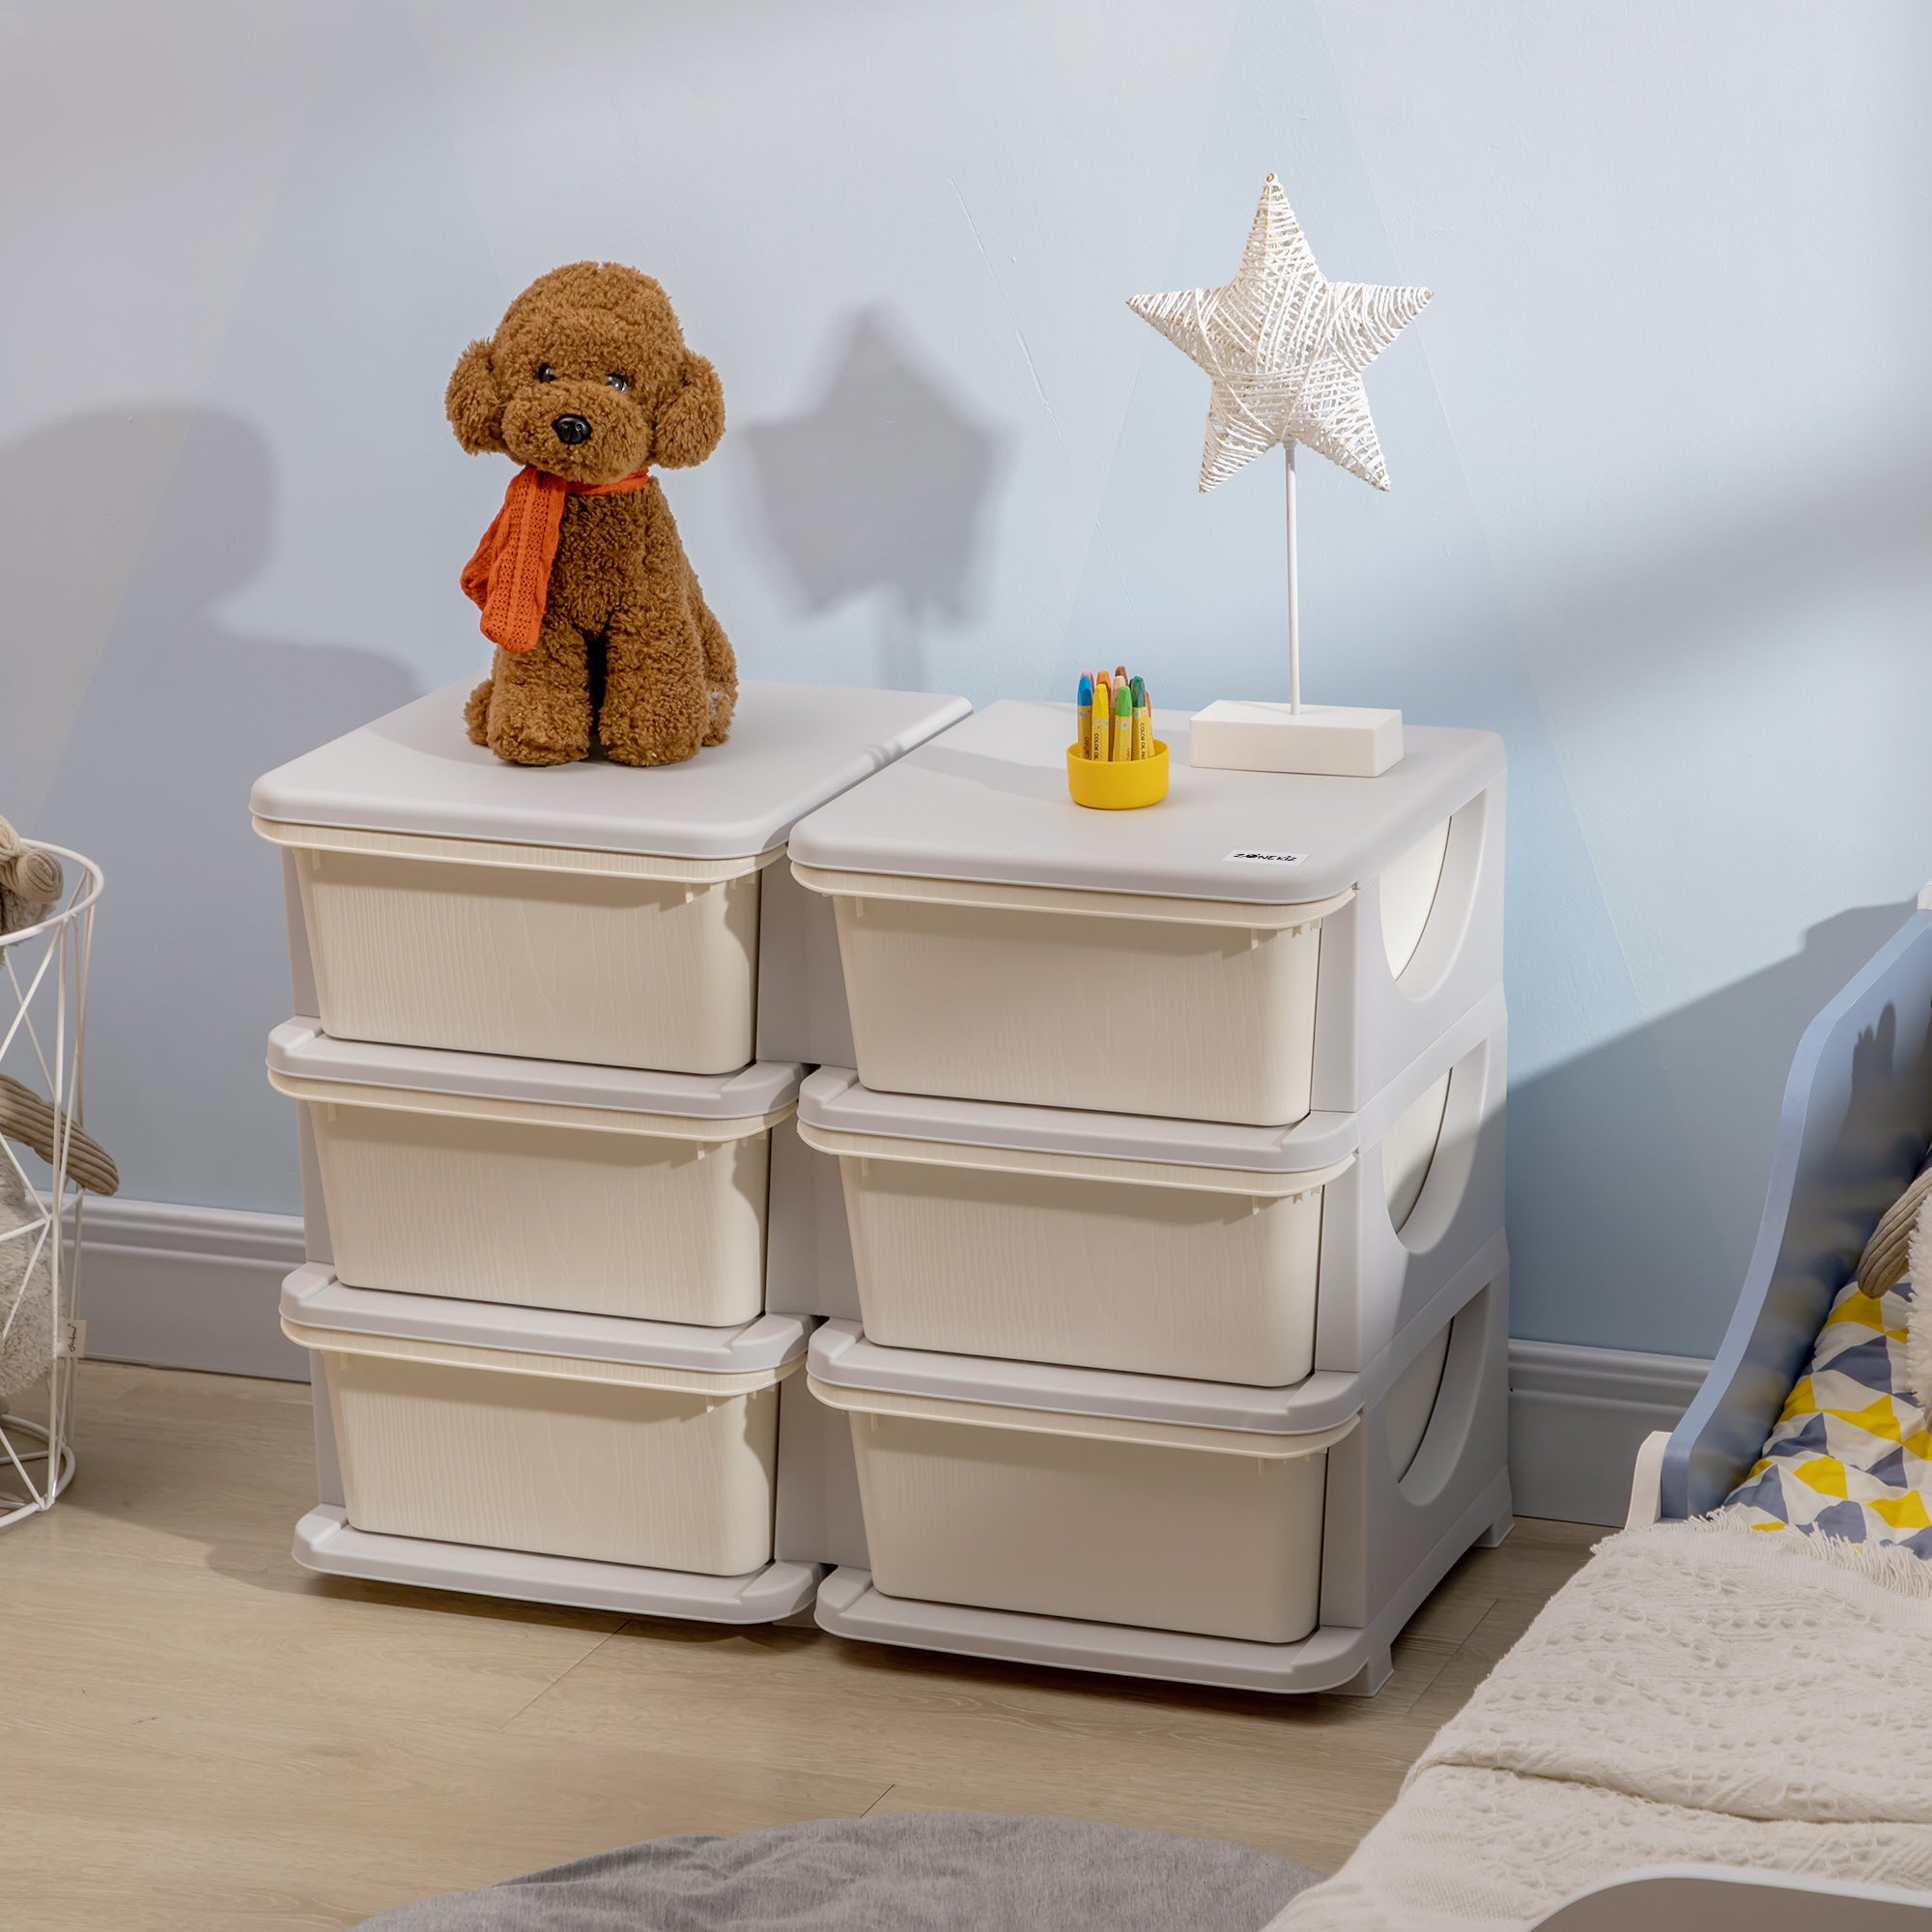 HOMCOM Kids Storage Units with 6 Drawers 3 Tier Chest Toy Organizer Cream